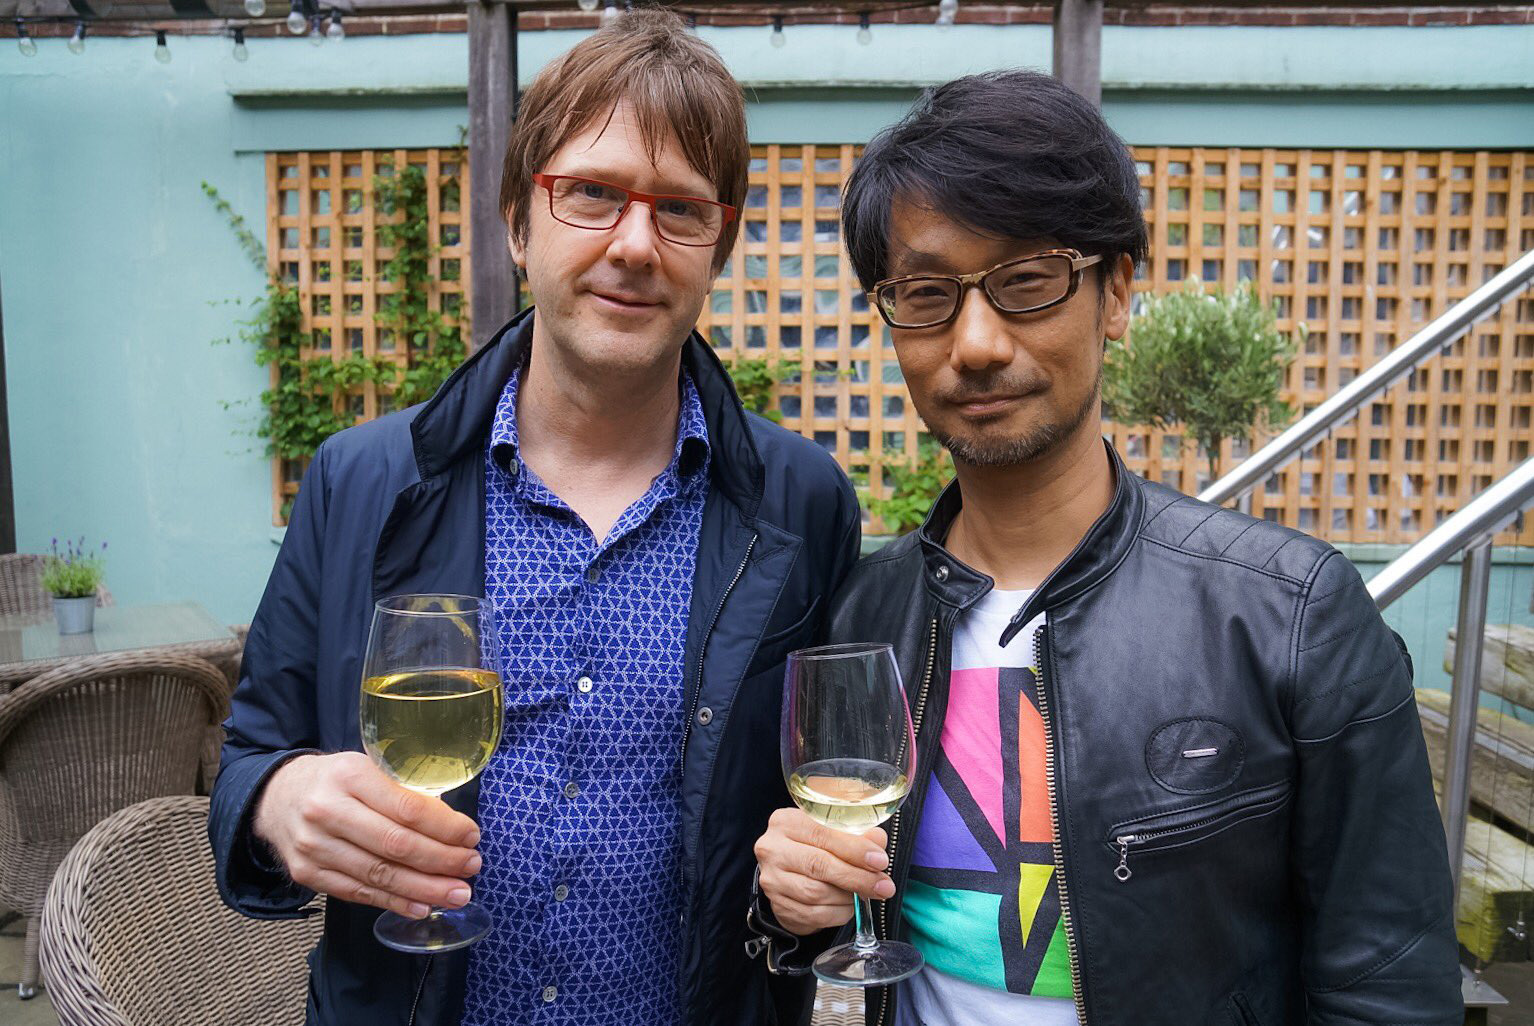 Hideo-Kojima-and-Mark-Cerny-Develop-Brighton-July-2016.jpg